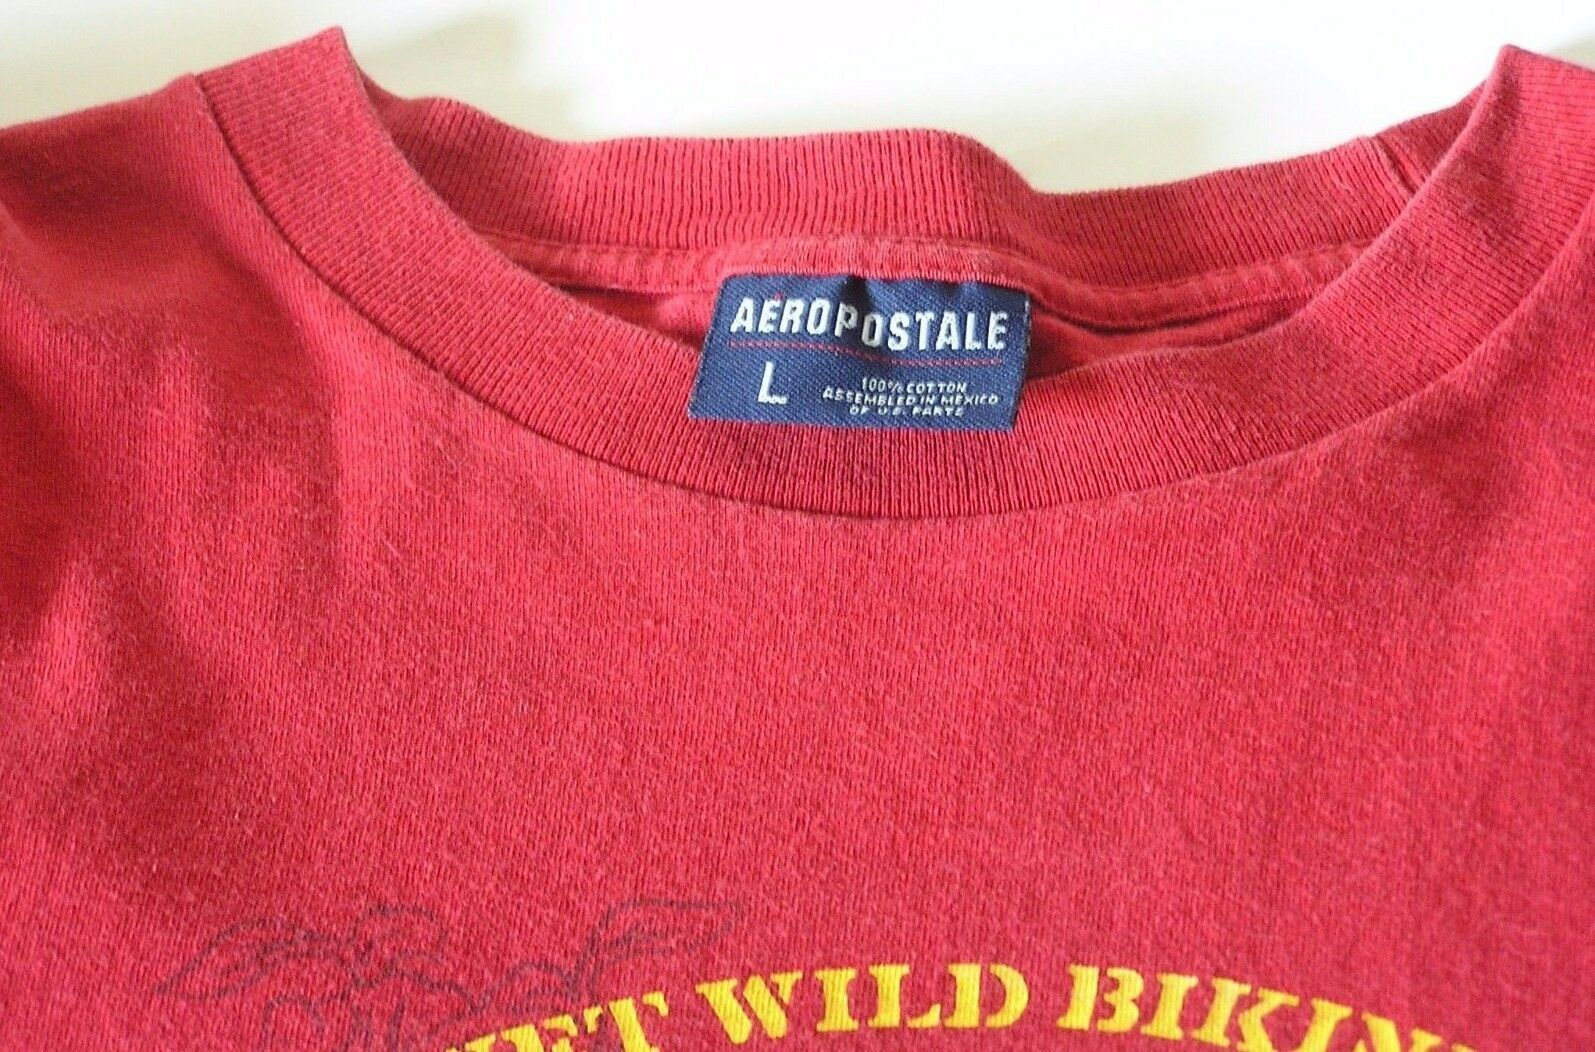 Wet Wild Bikini Contest T Shirt Men's Size L and 19 similar items